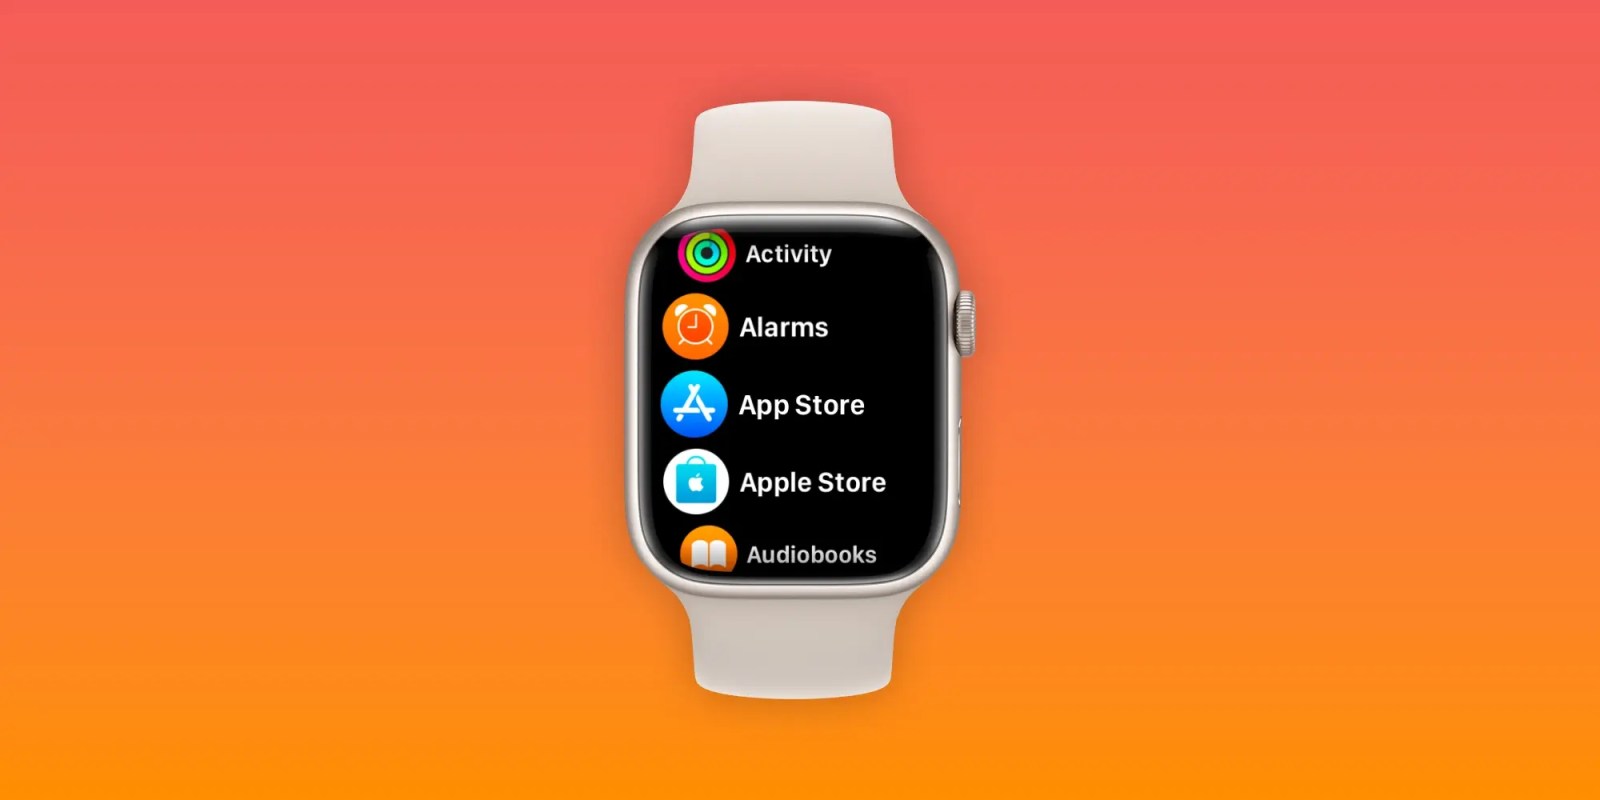 Apple Watch list view